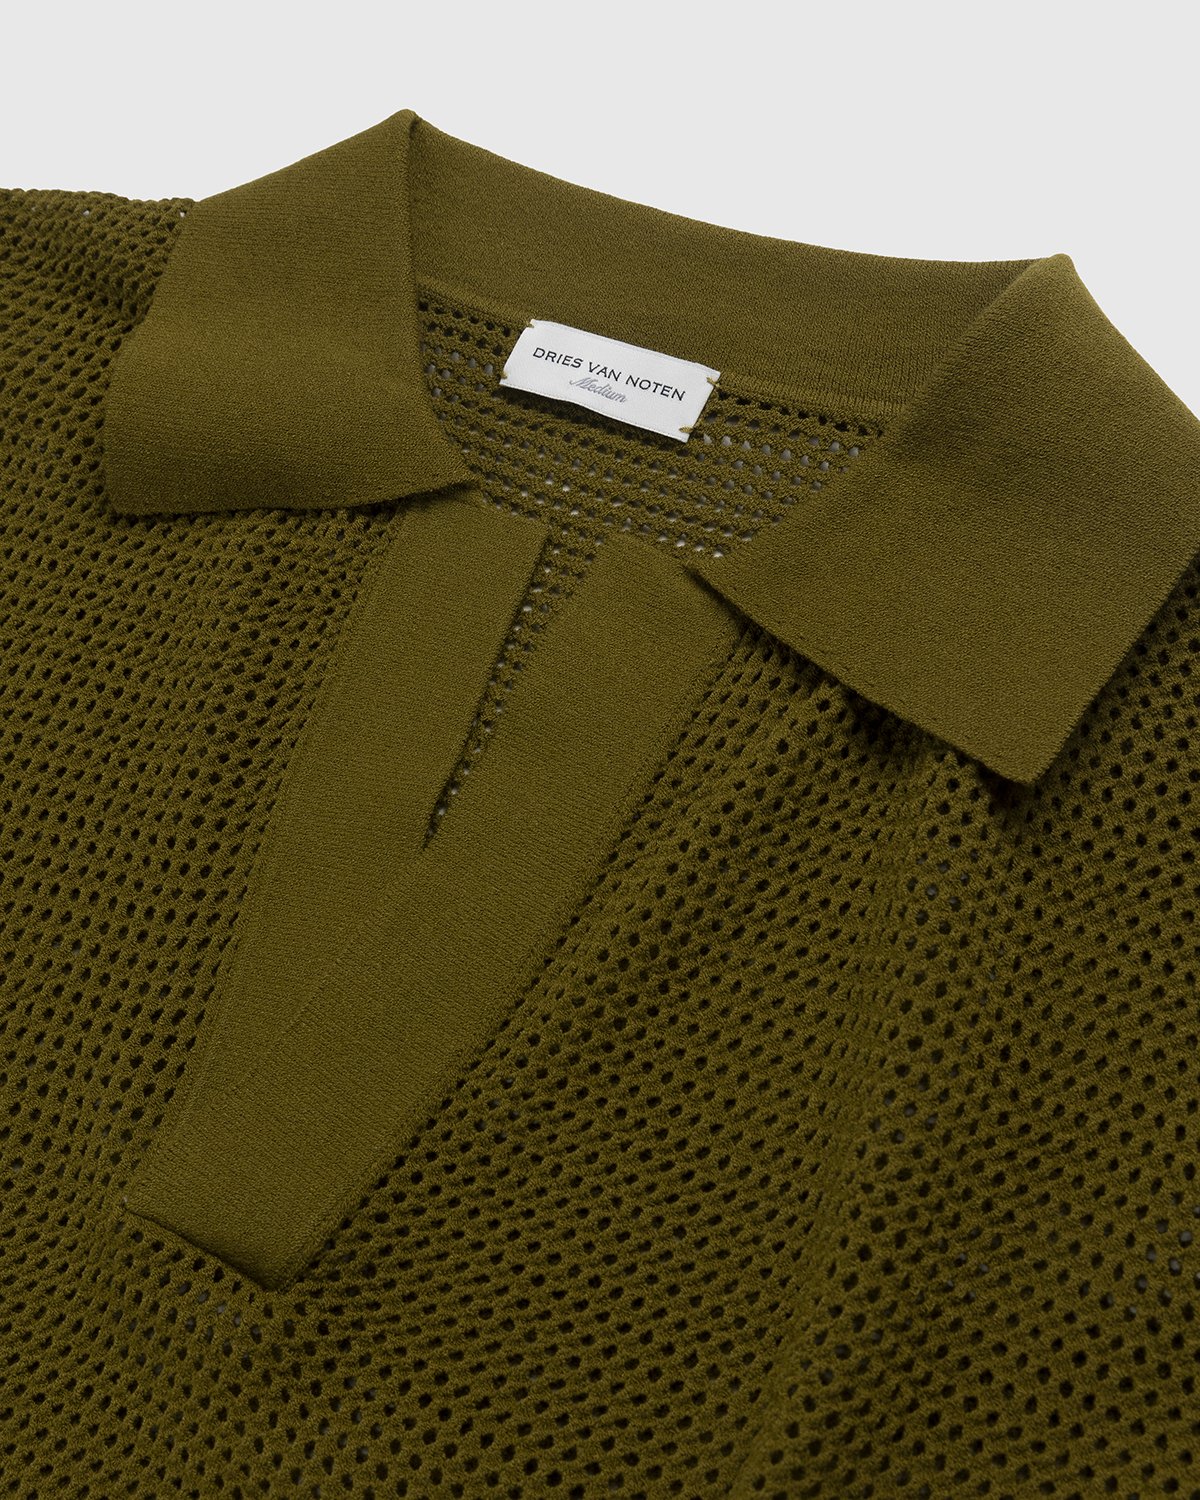 Dries van Noten - Jael Polo Shirt Olive - Clothing - Green - Image 4